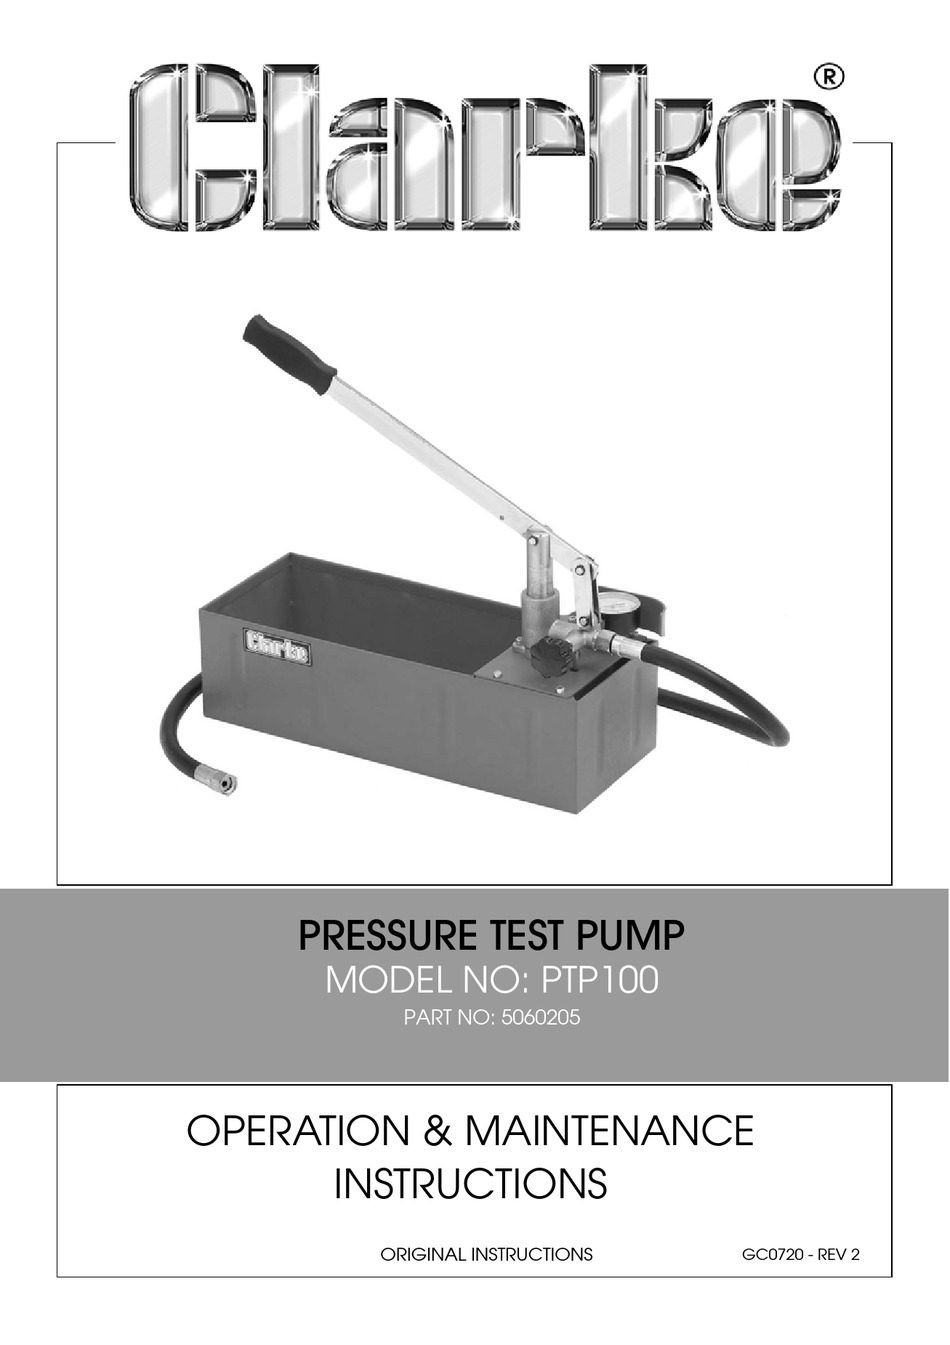 Clarke PTP100 Pressure Test Pump Ref: 5060205 